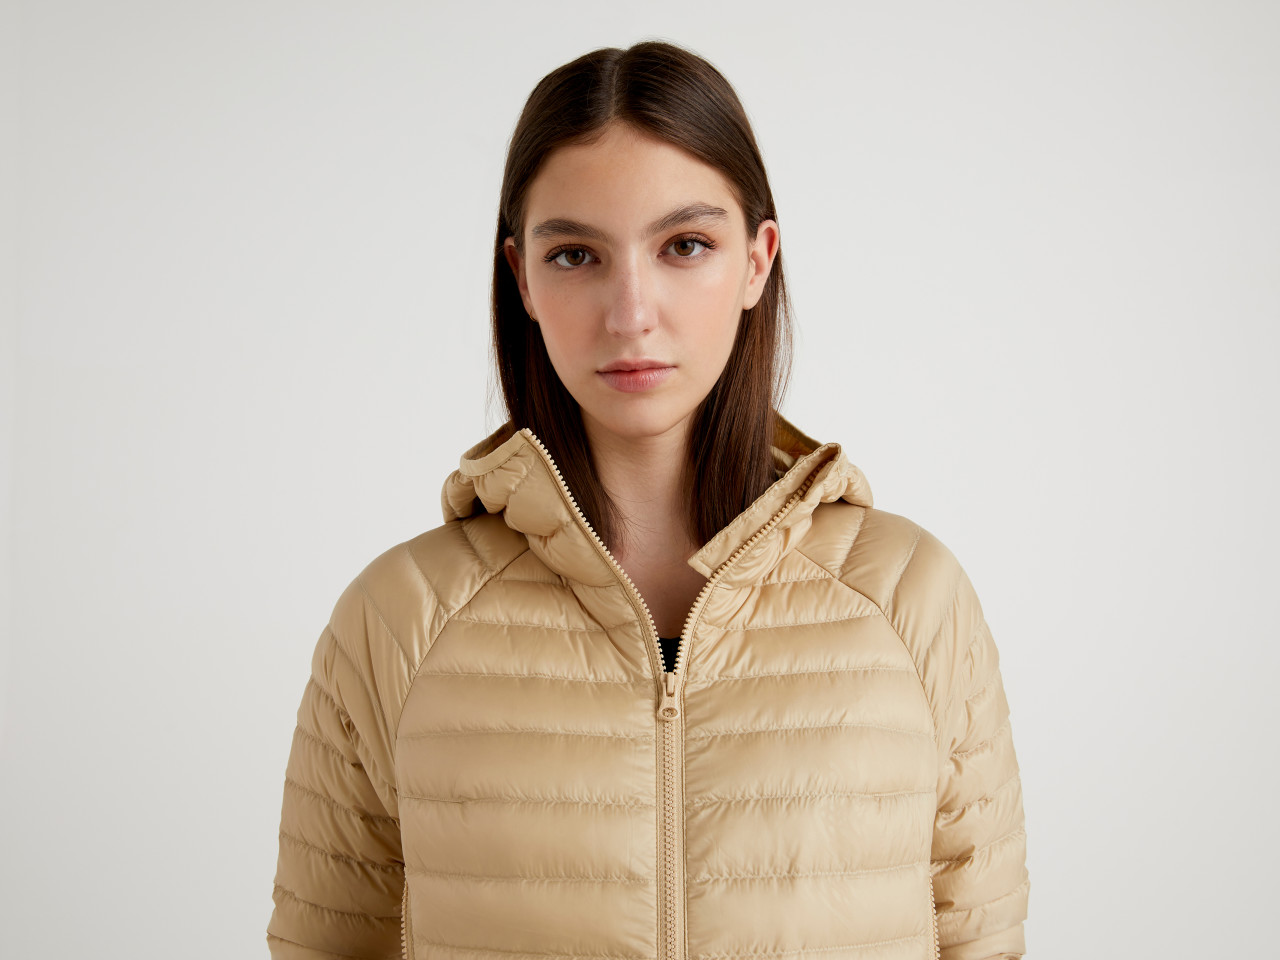 Discover 241+ benetton women’s jackets super hot